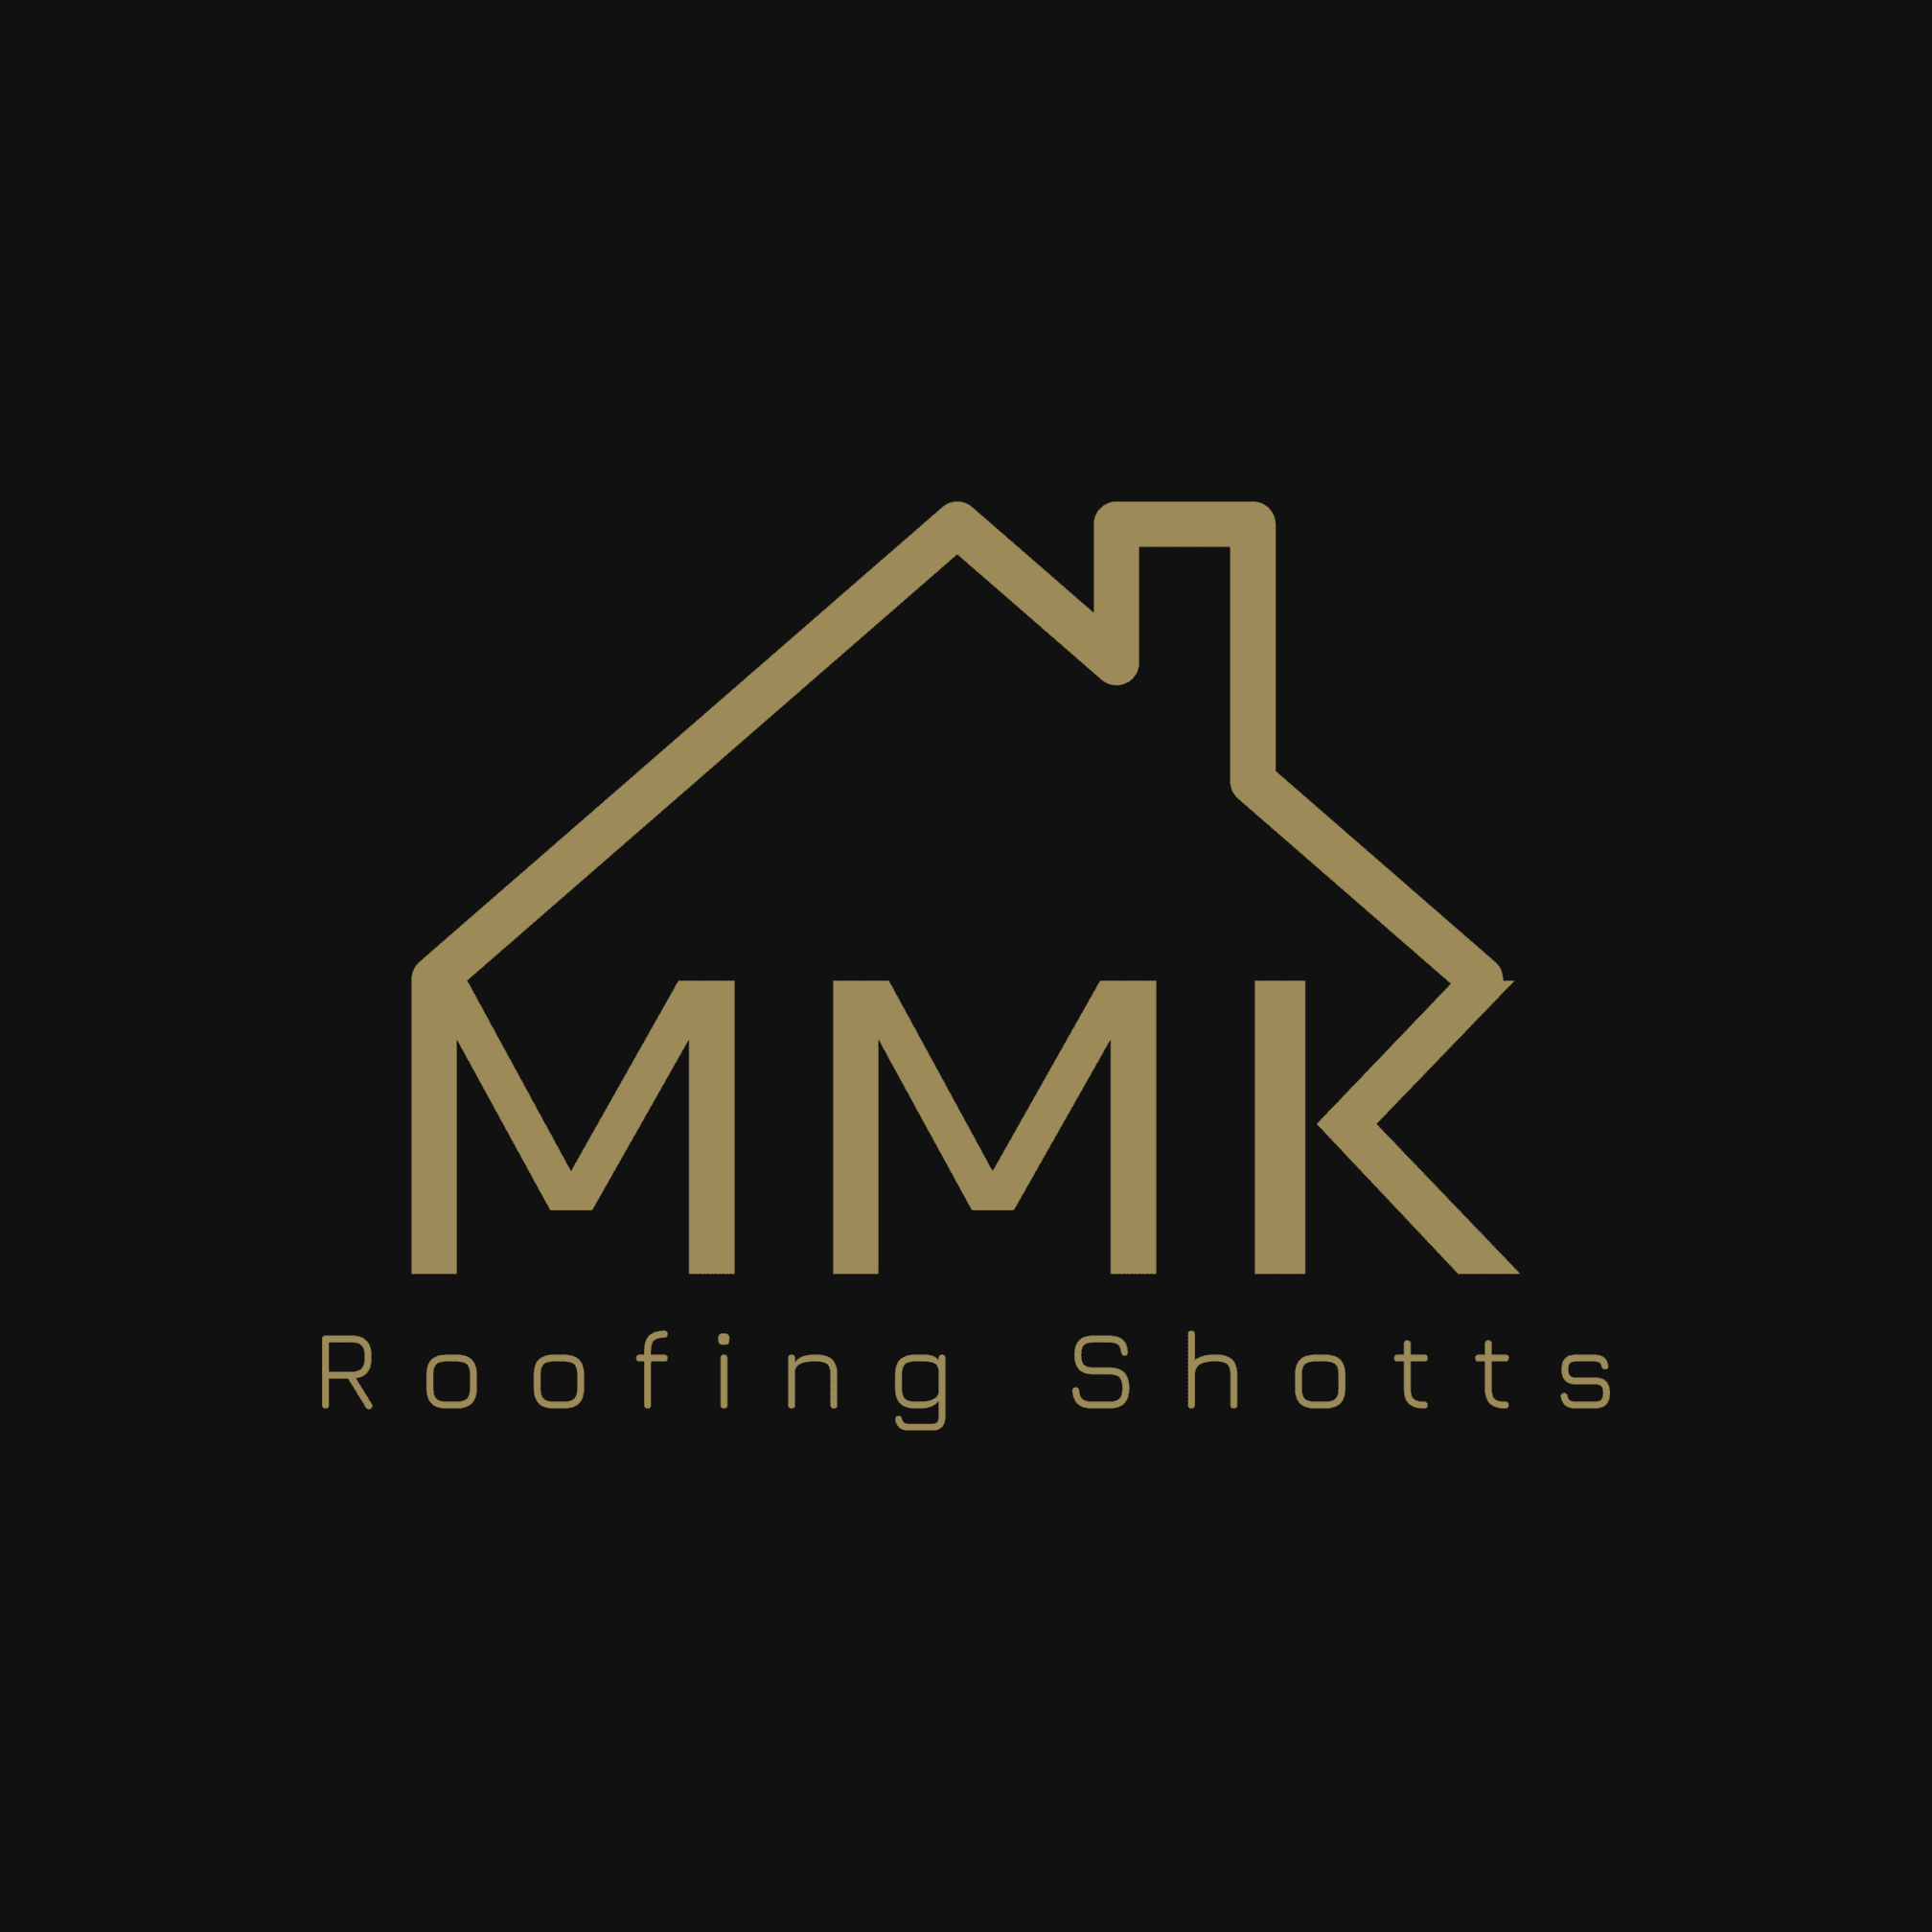 MMK Roofing Shotts Logo